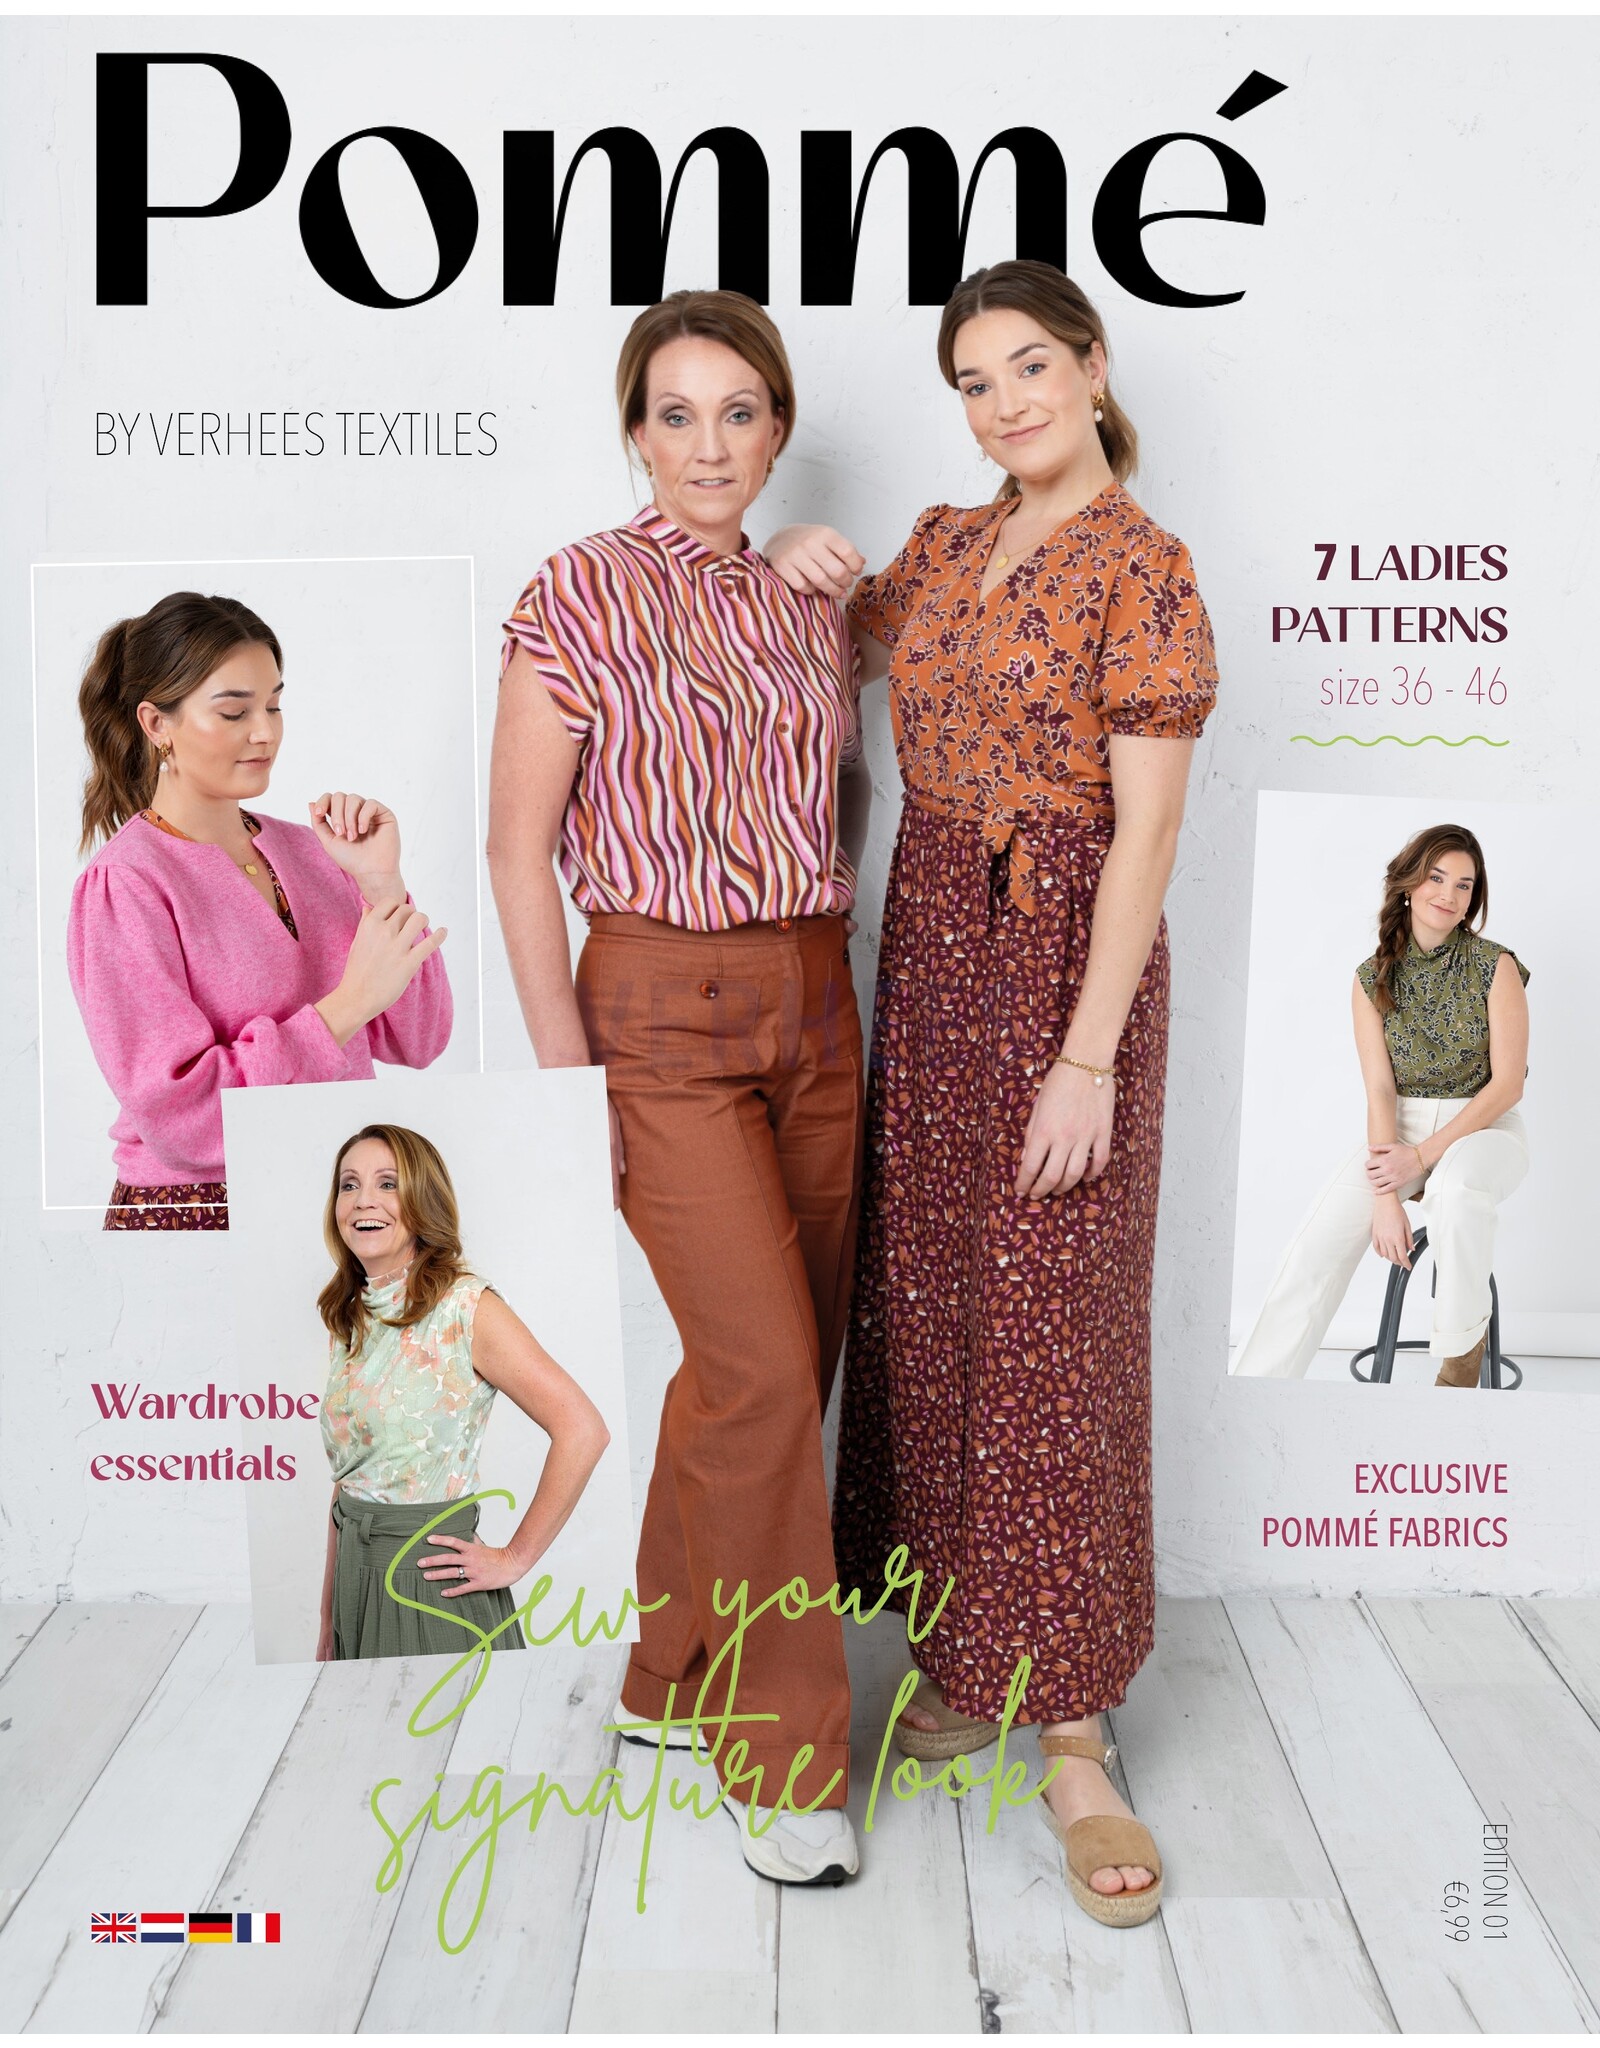 Magazine: Pommé Edition 01